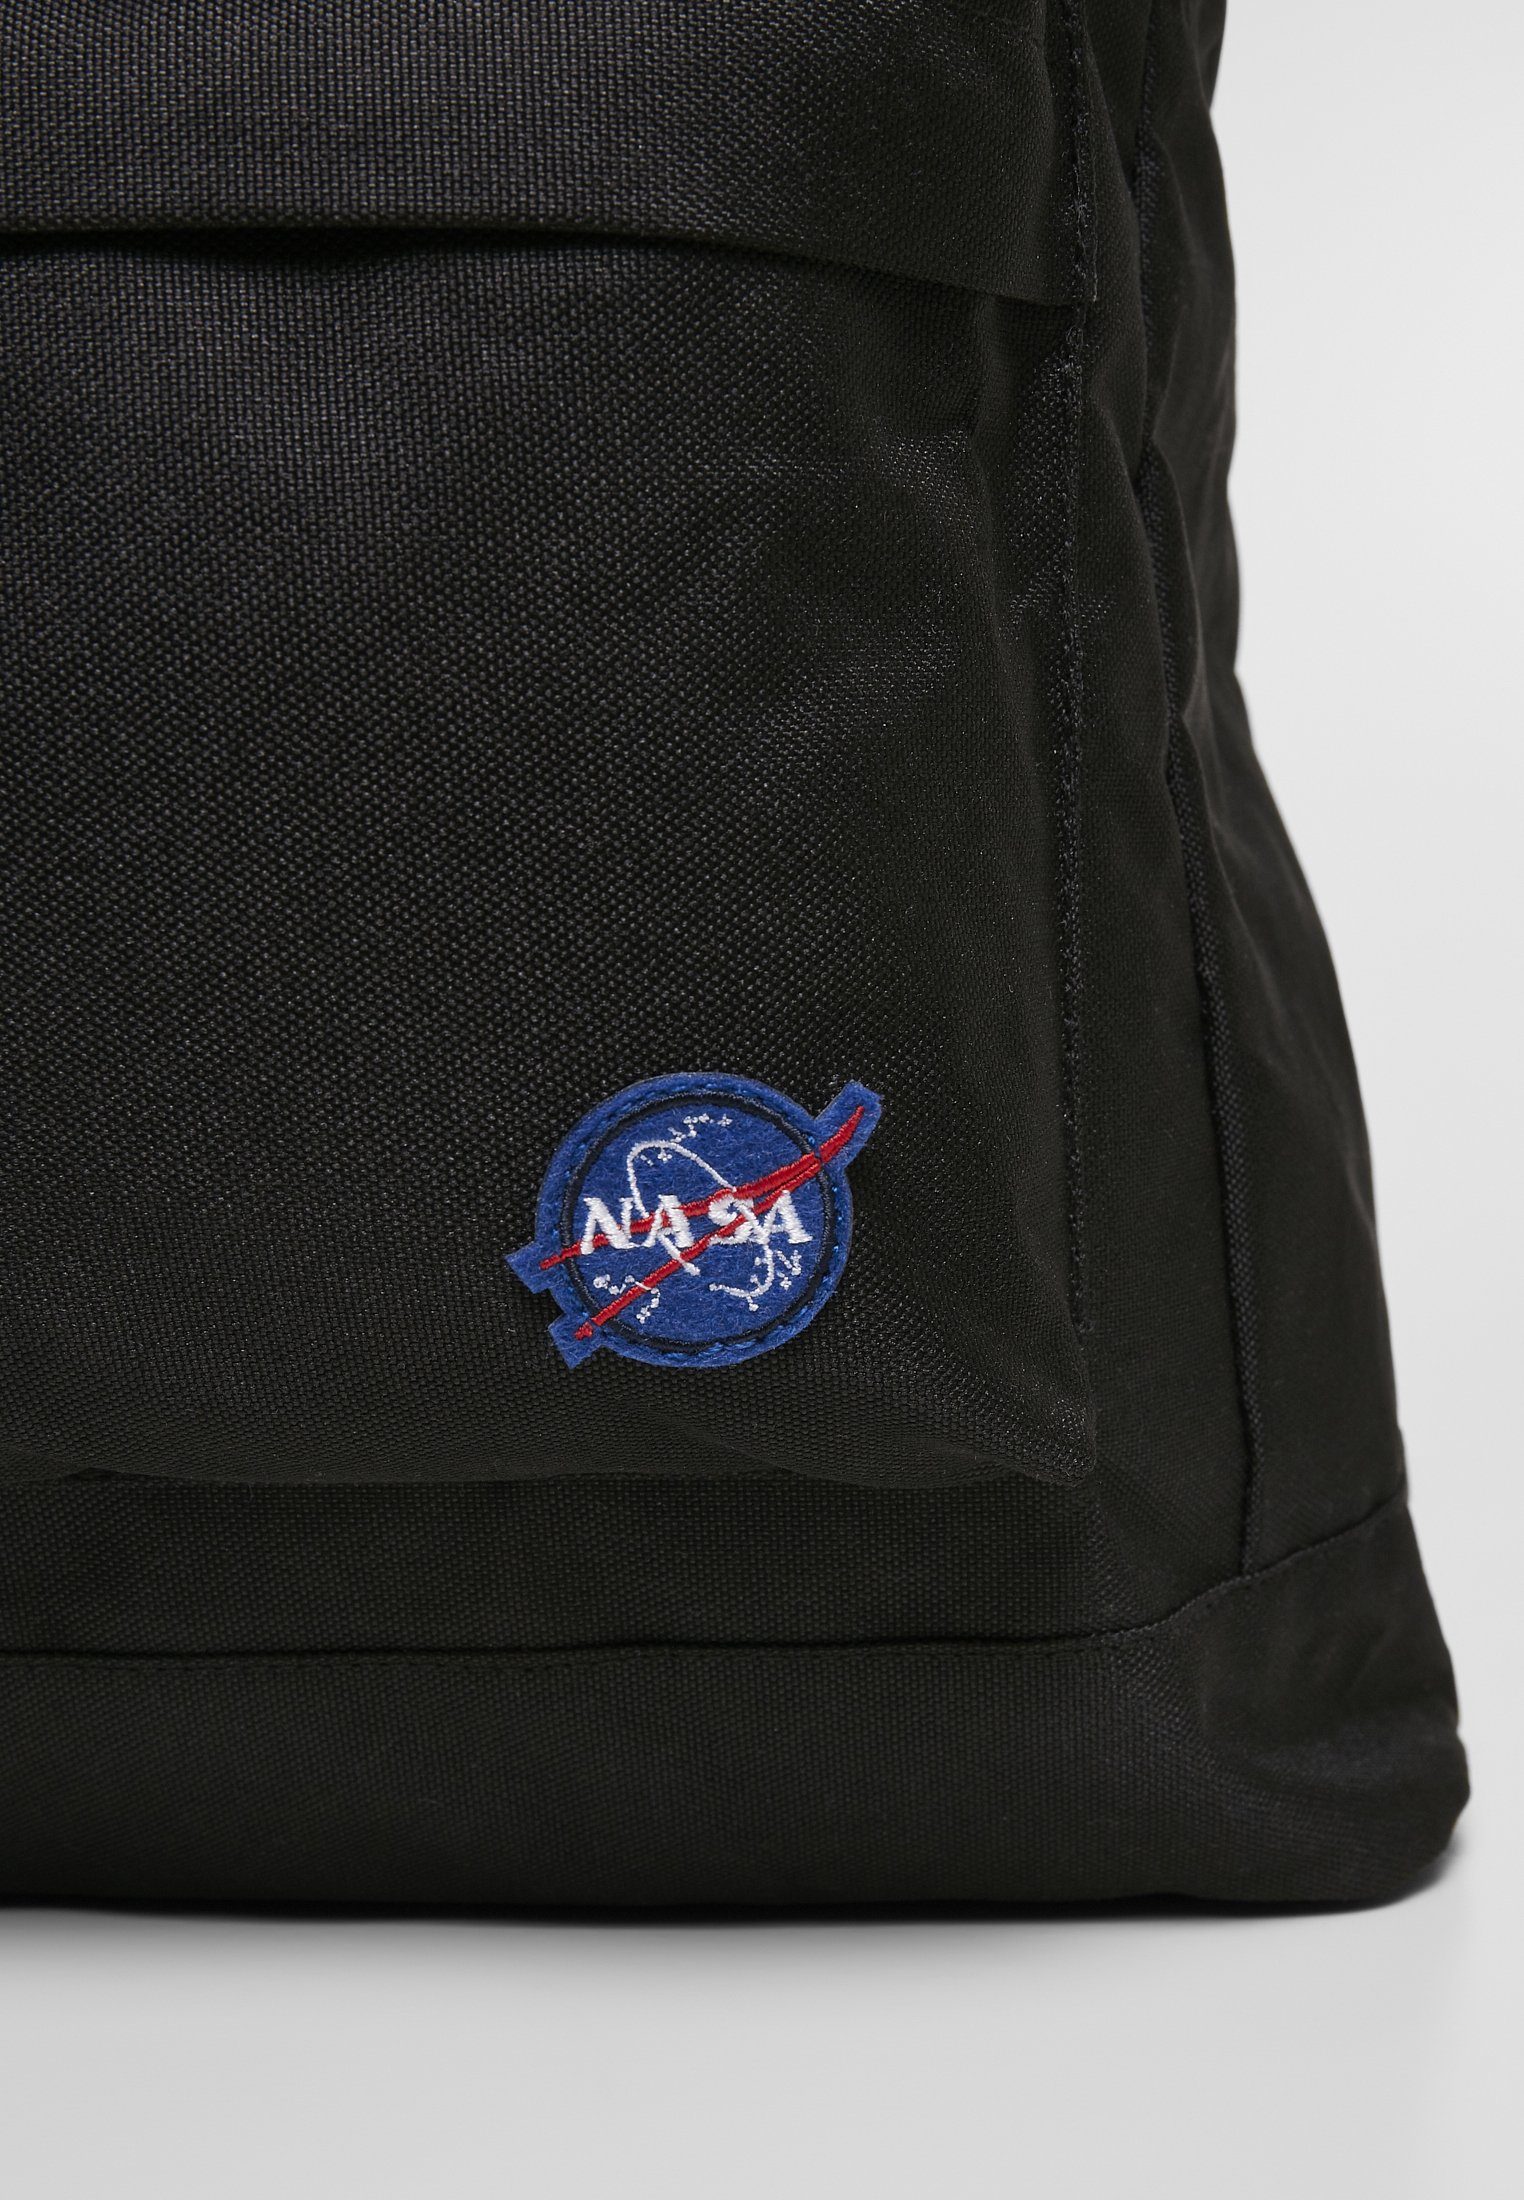 Backpack Accessoires NASA Rucksack MisterTee